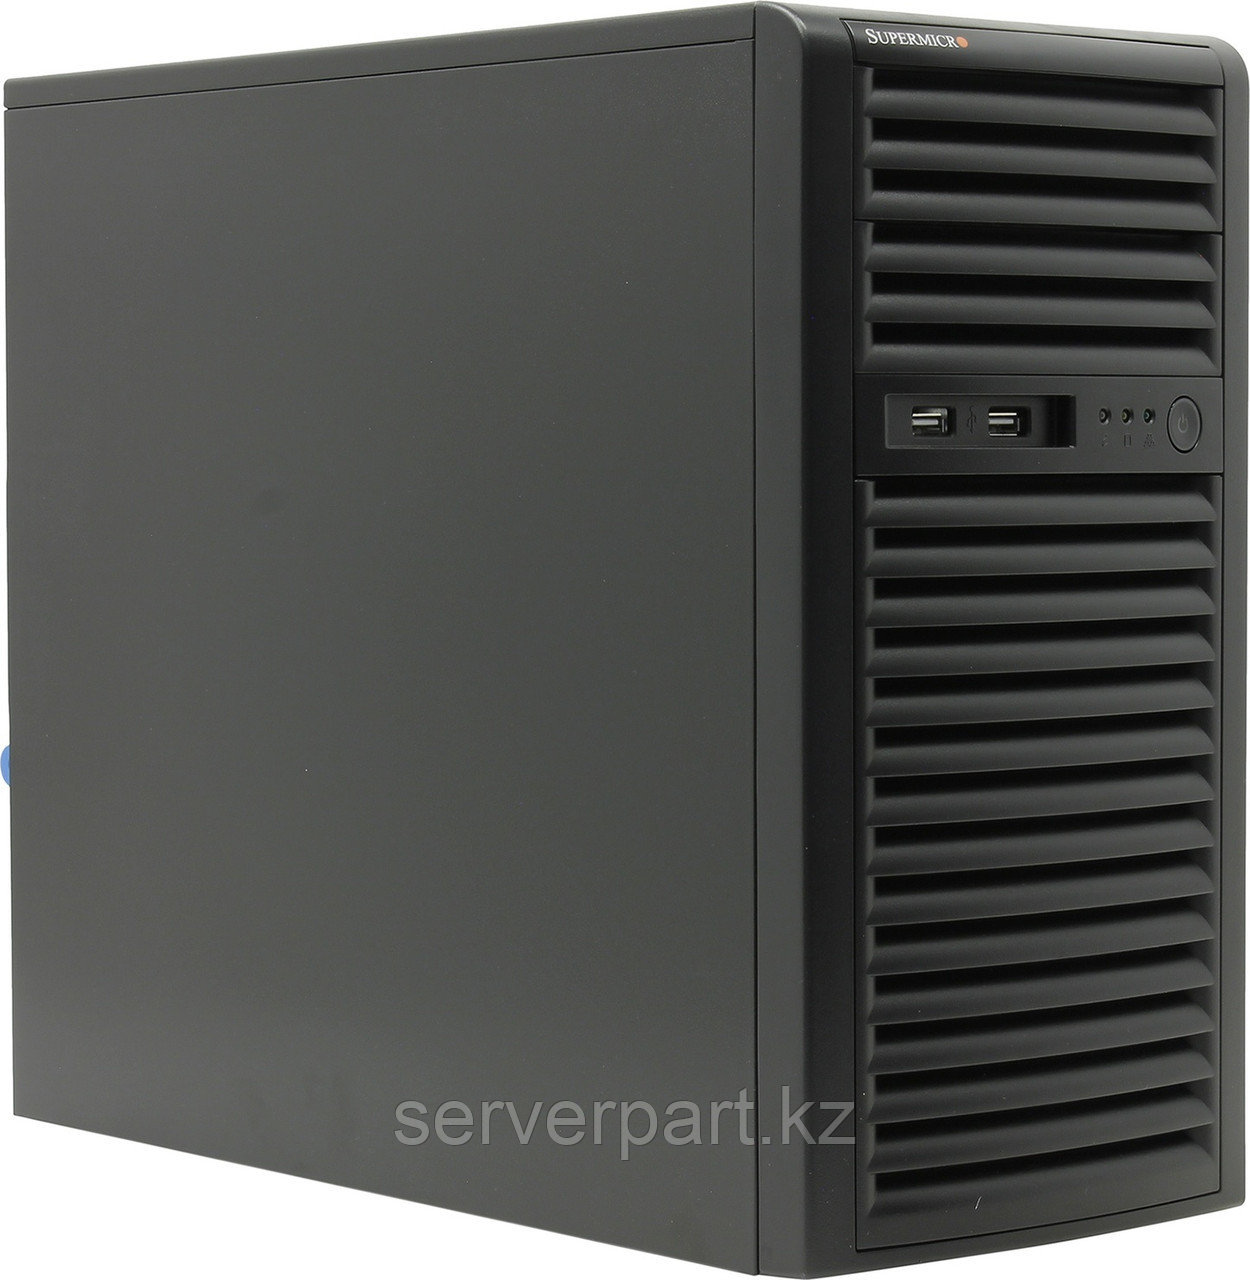 Сервер Supermicro SYS-5039C (Tower 4LFF)/4-core intel xeon E2224 (3.4GHz)/24GB EUDIMM